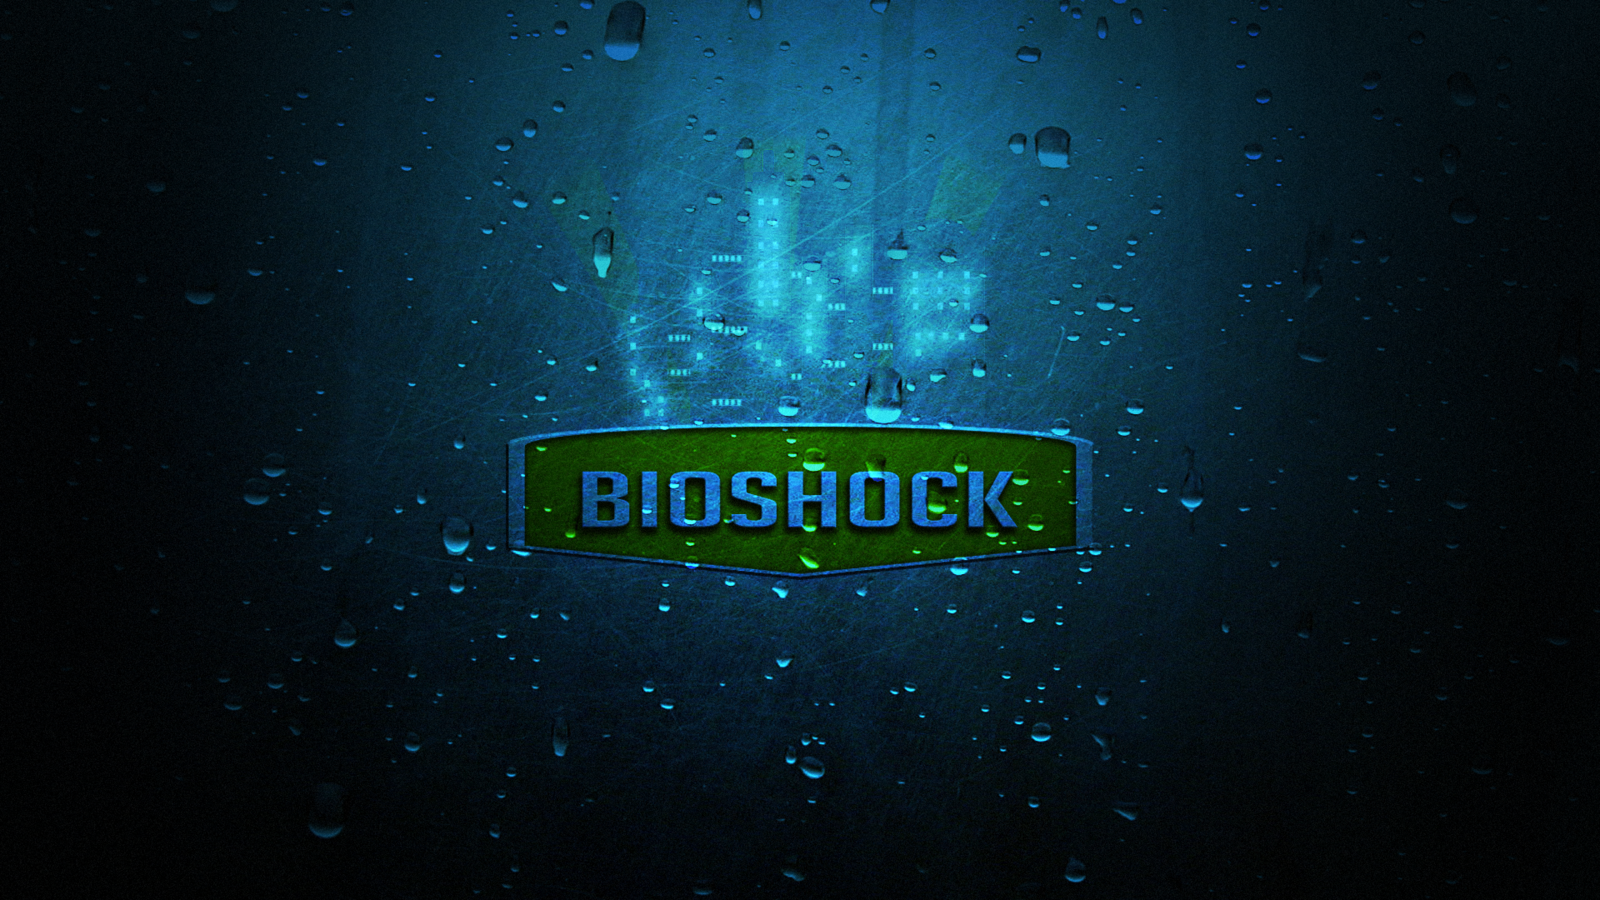 Live wallpaper City under water in BioShock 2 DOWNLOAD FREE 880861572